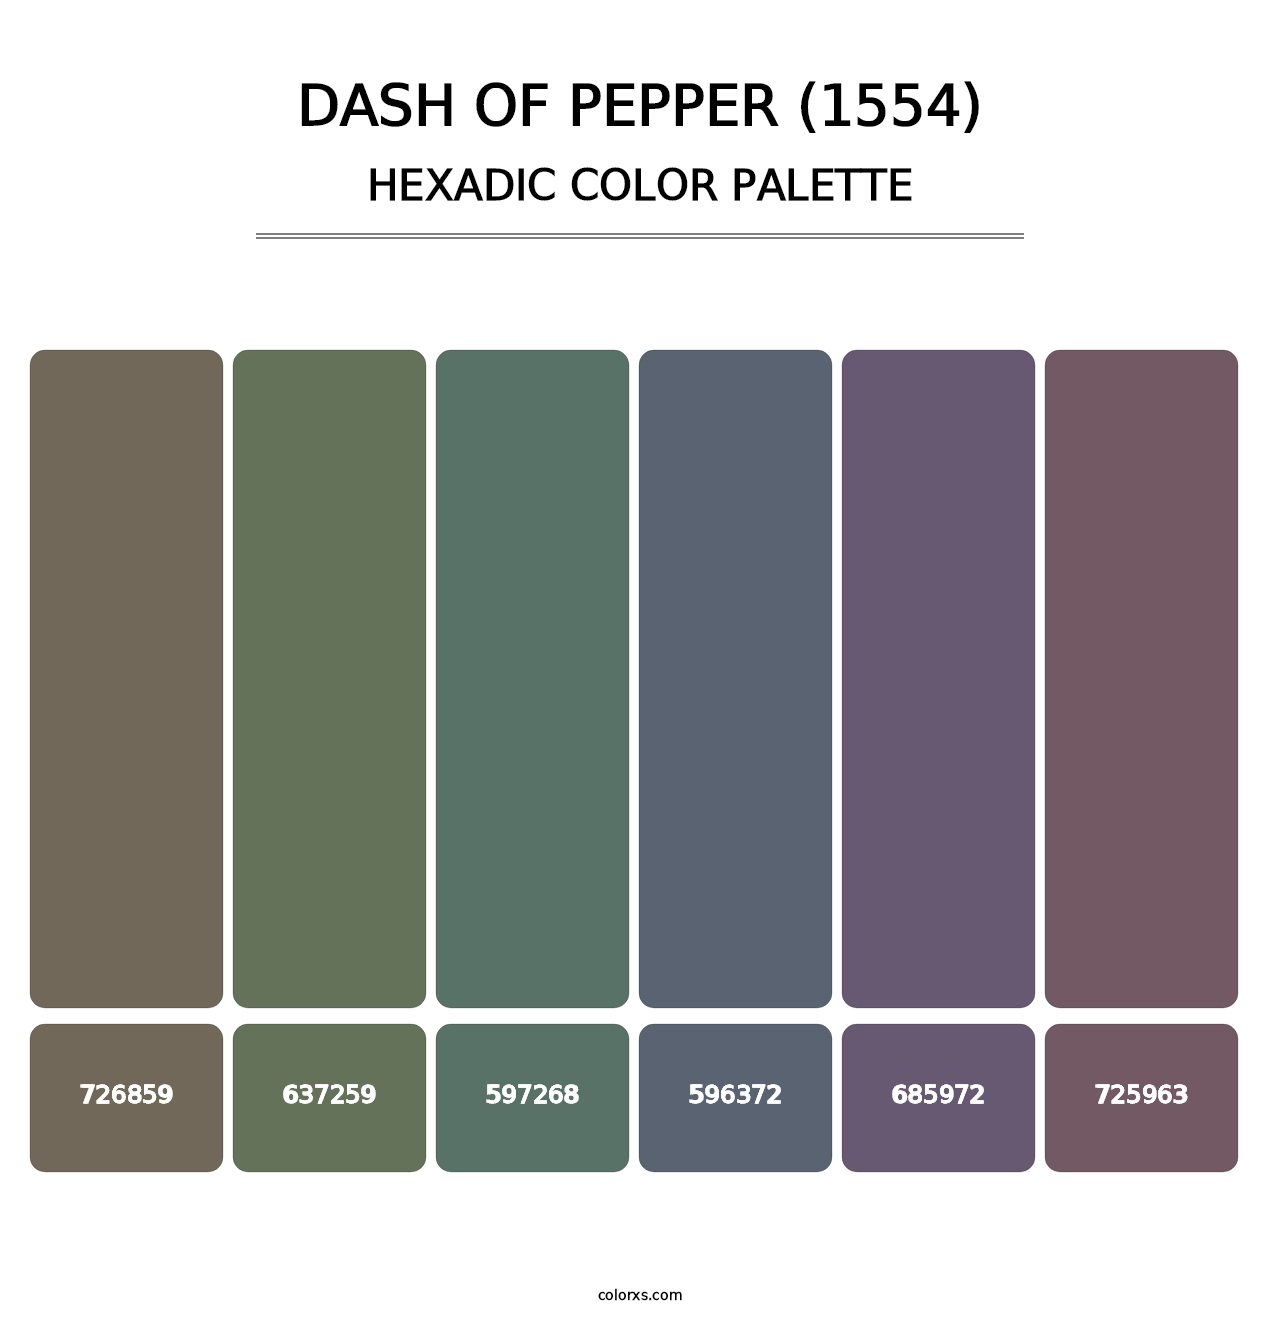 Dash of Pepper (1554) - Hexadic Color Palette